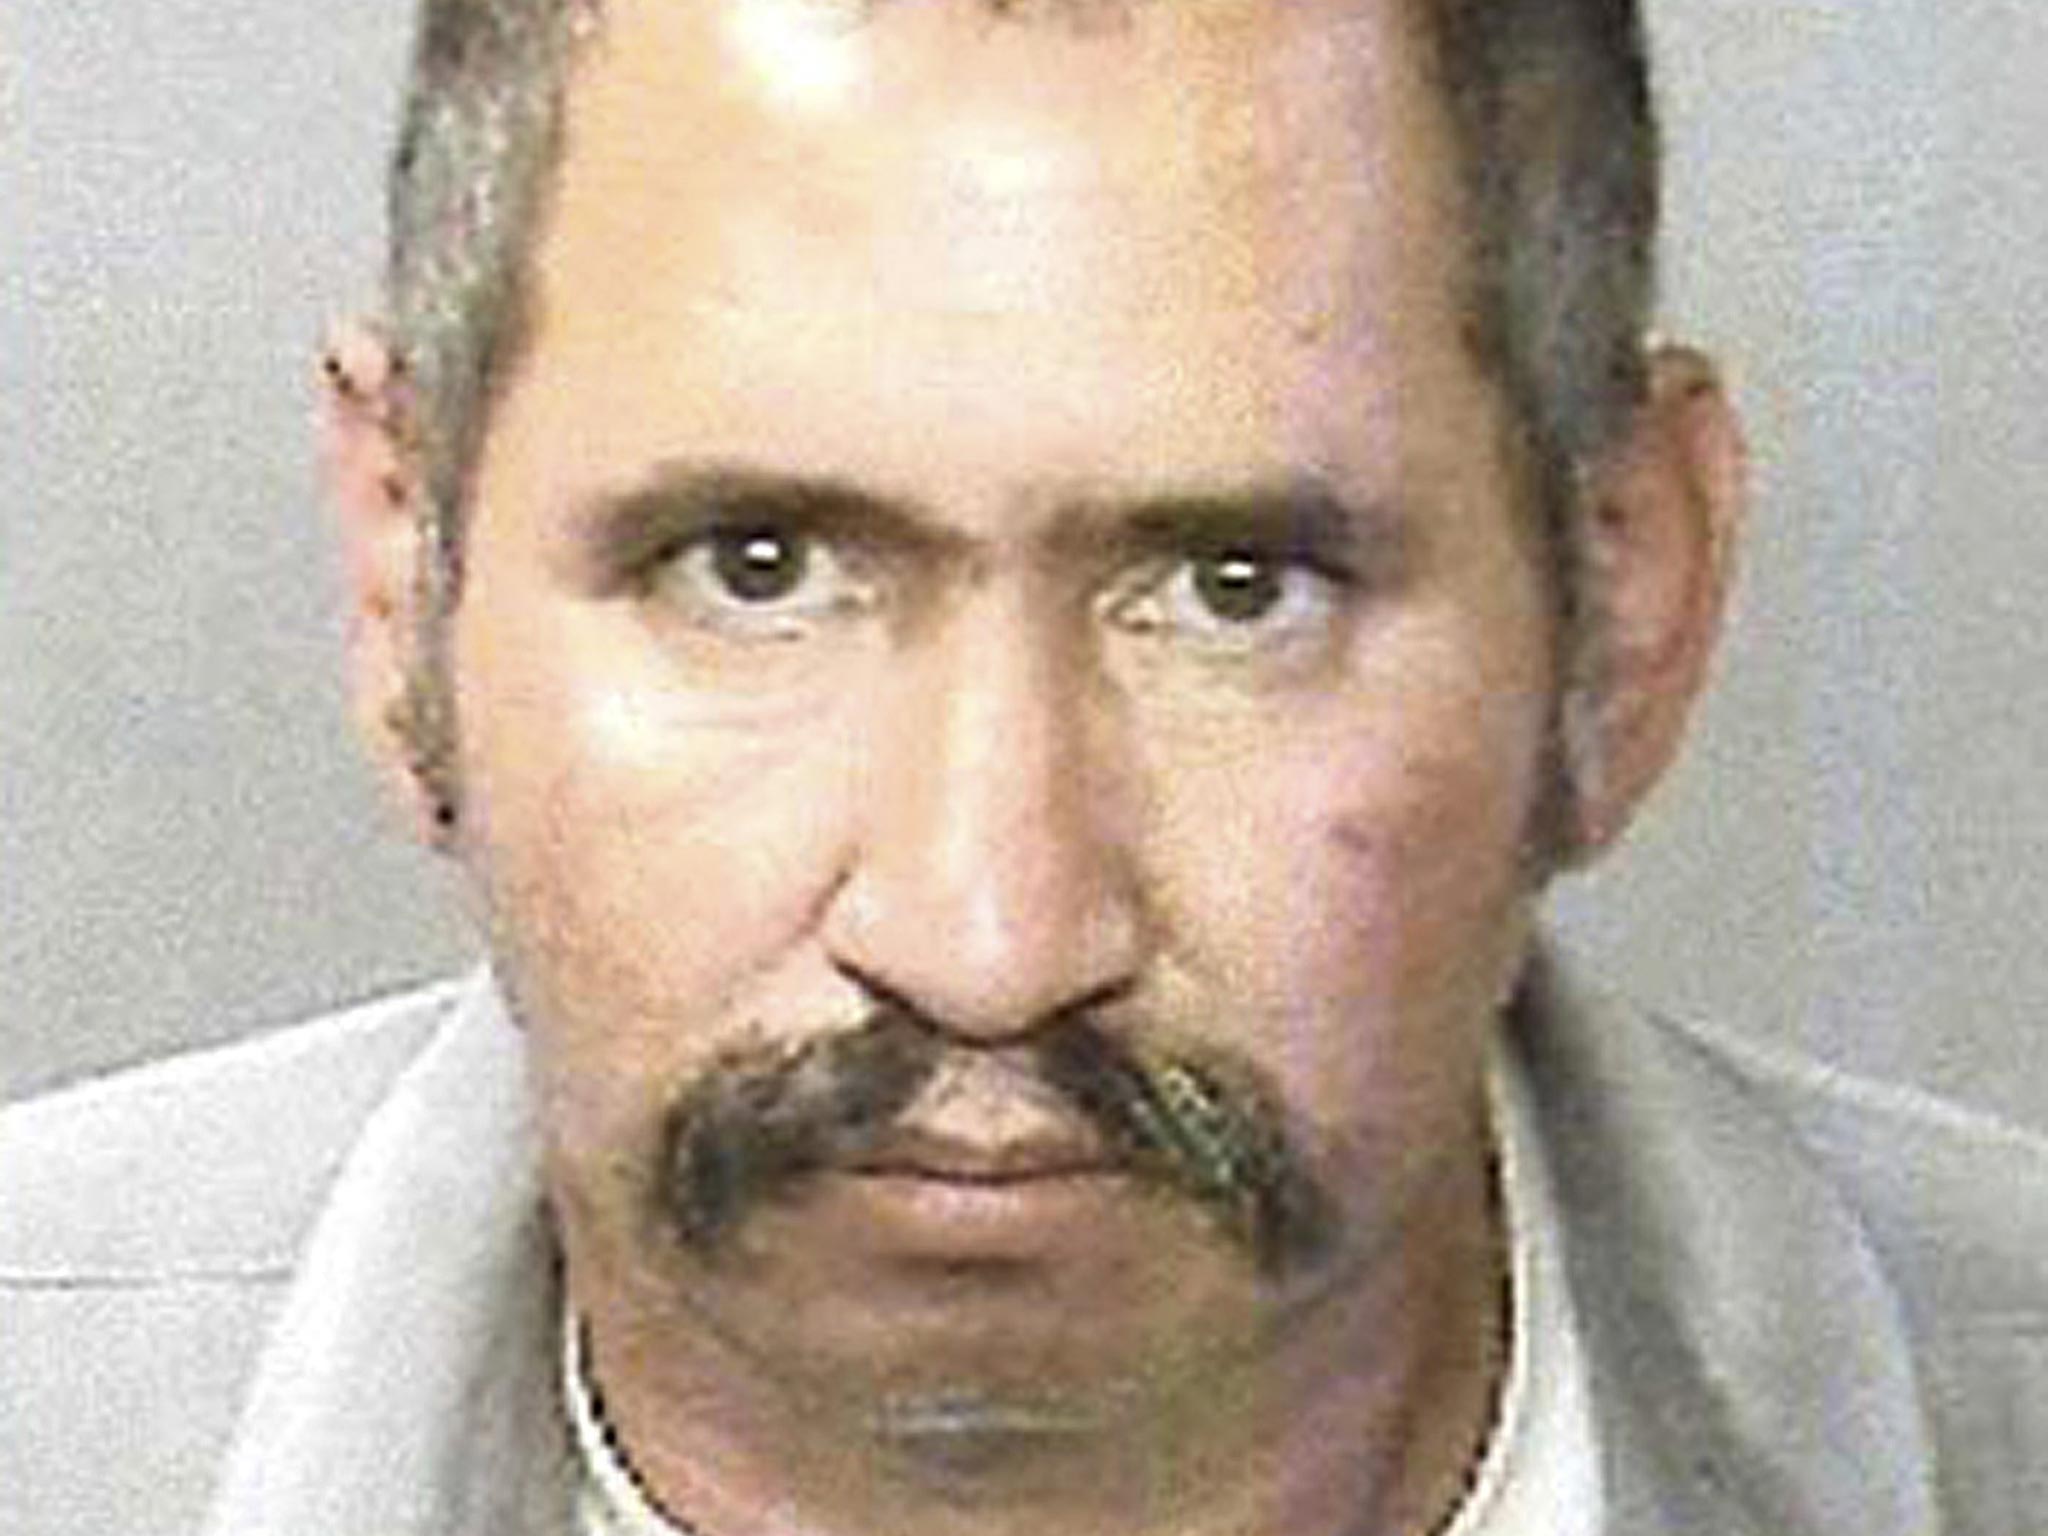 Jose Manuel Martinez, who has been described as a contract killer by California prosecutors